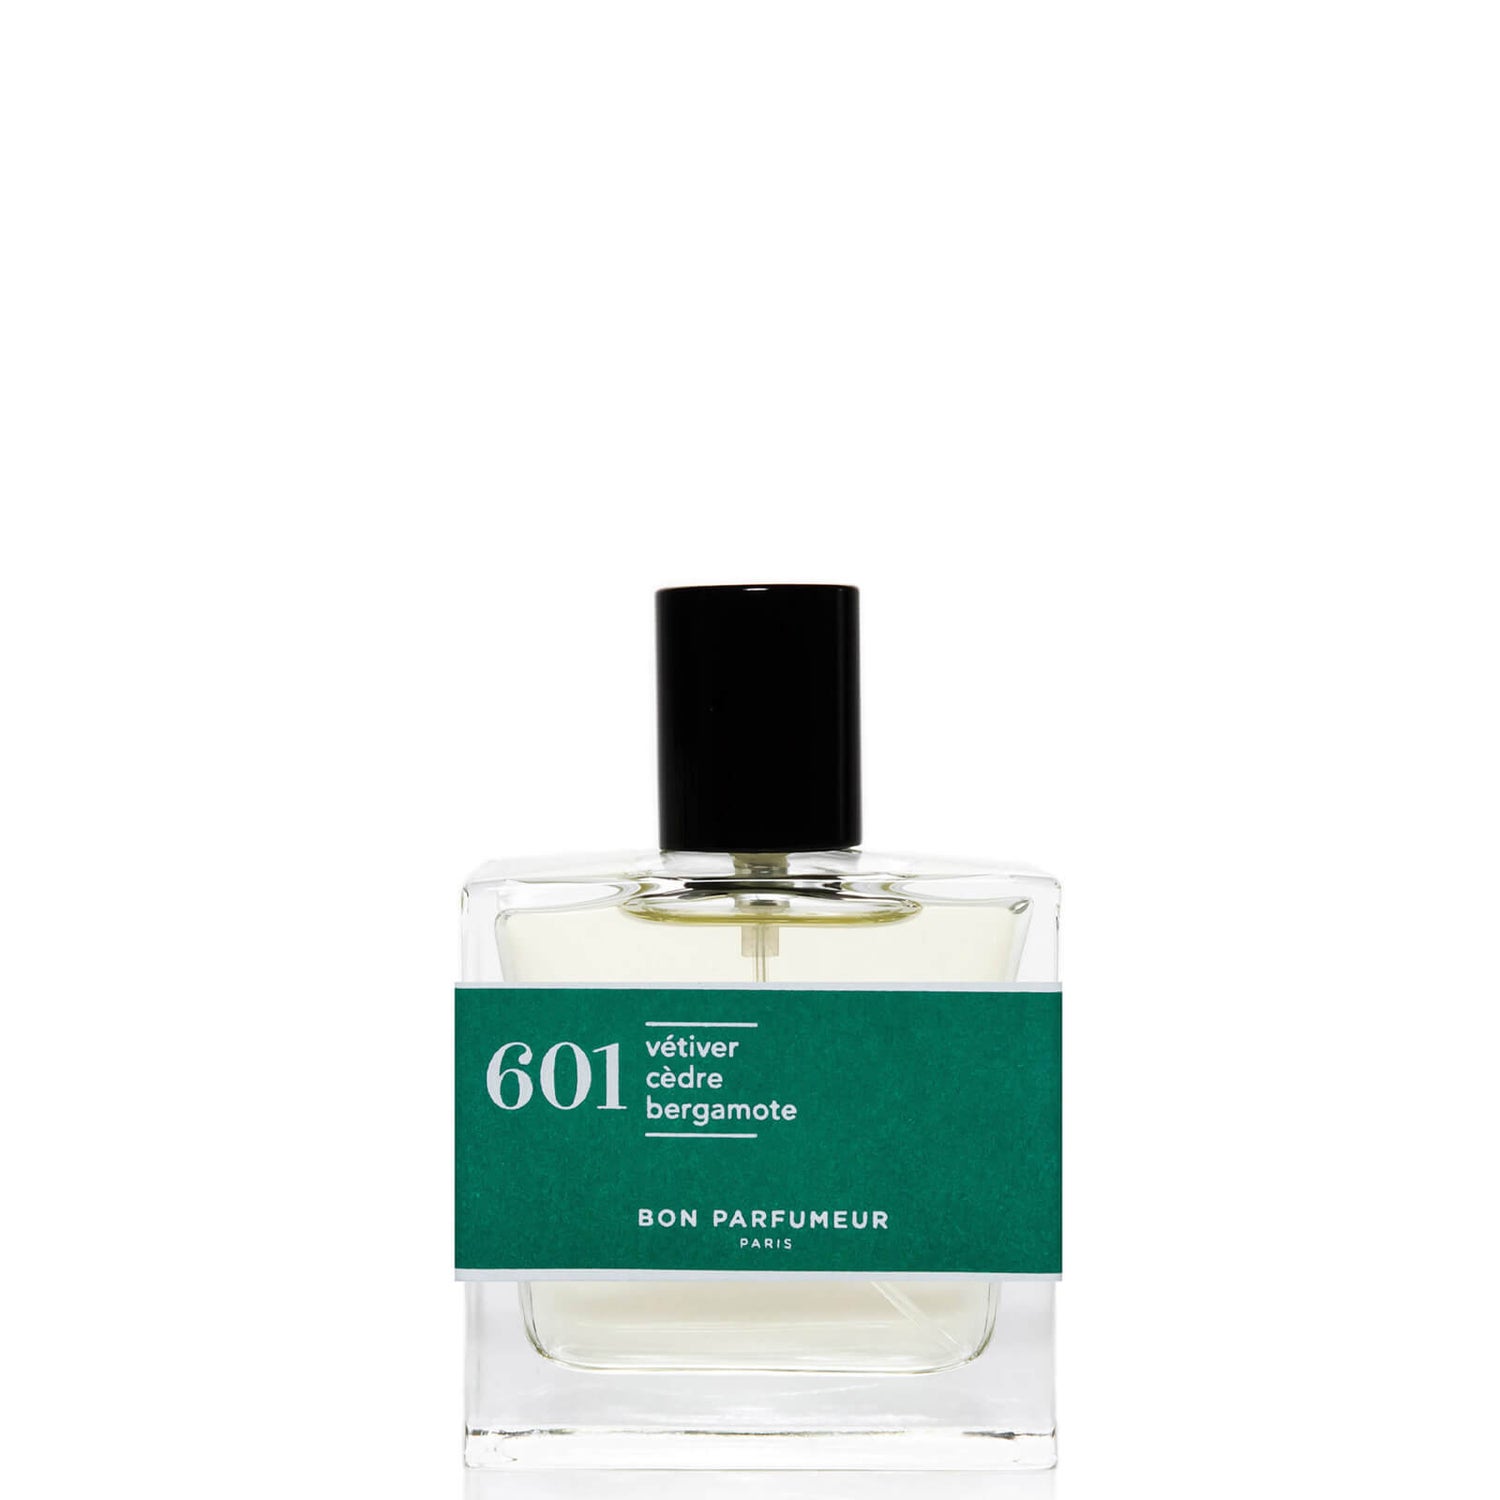 Bon Parfumeur 601 Vetiver Cedar Bergamot Eau de Parfum - 30ml